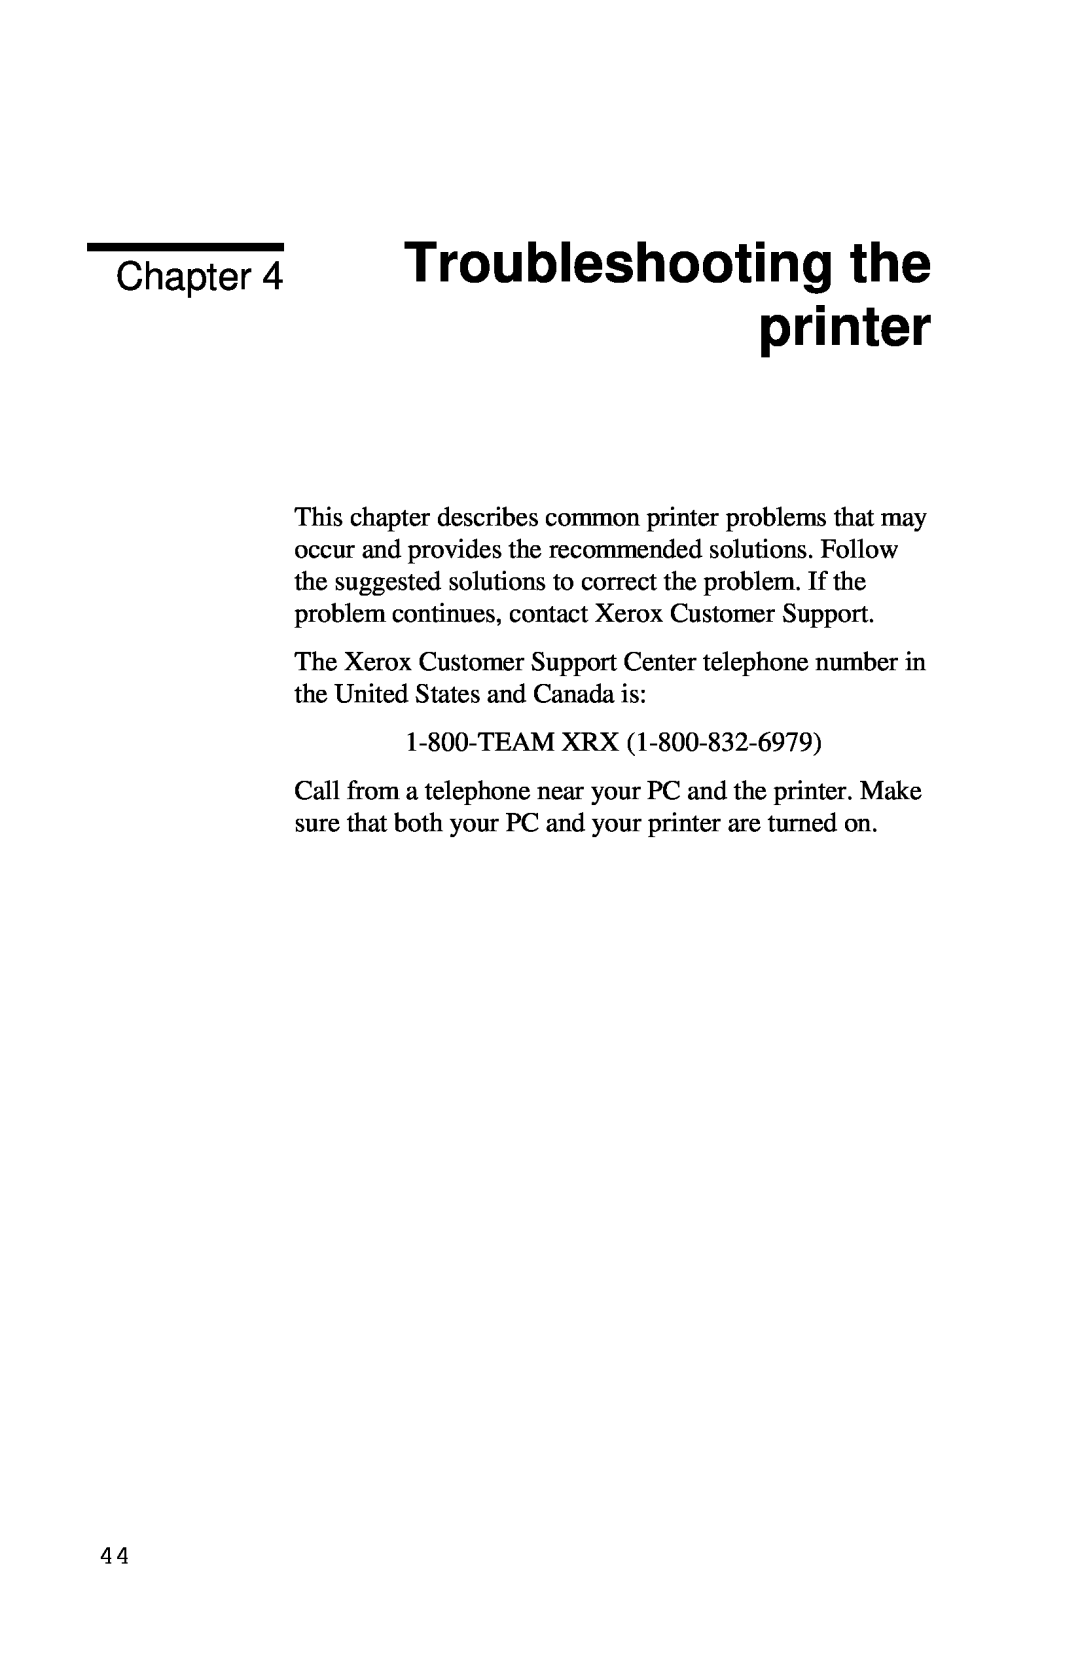 Xerox Inkjet Printer manual Troubleshooting the printer, Chapter 